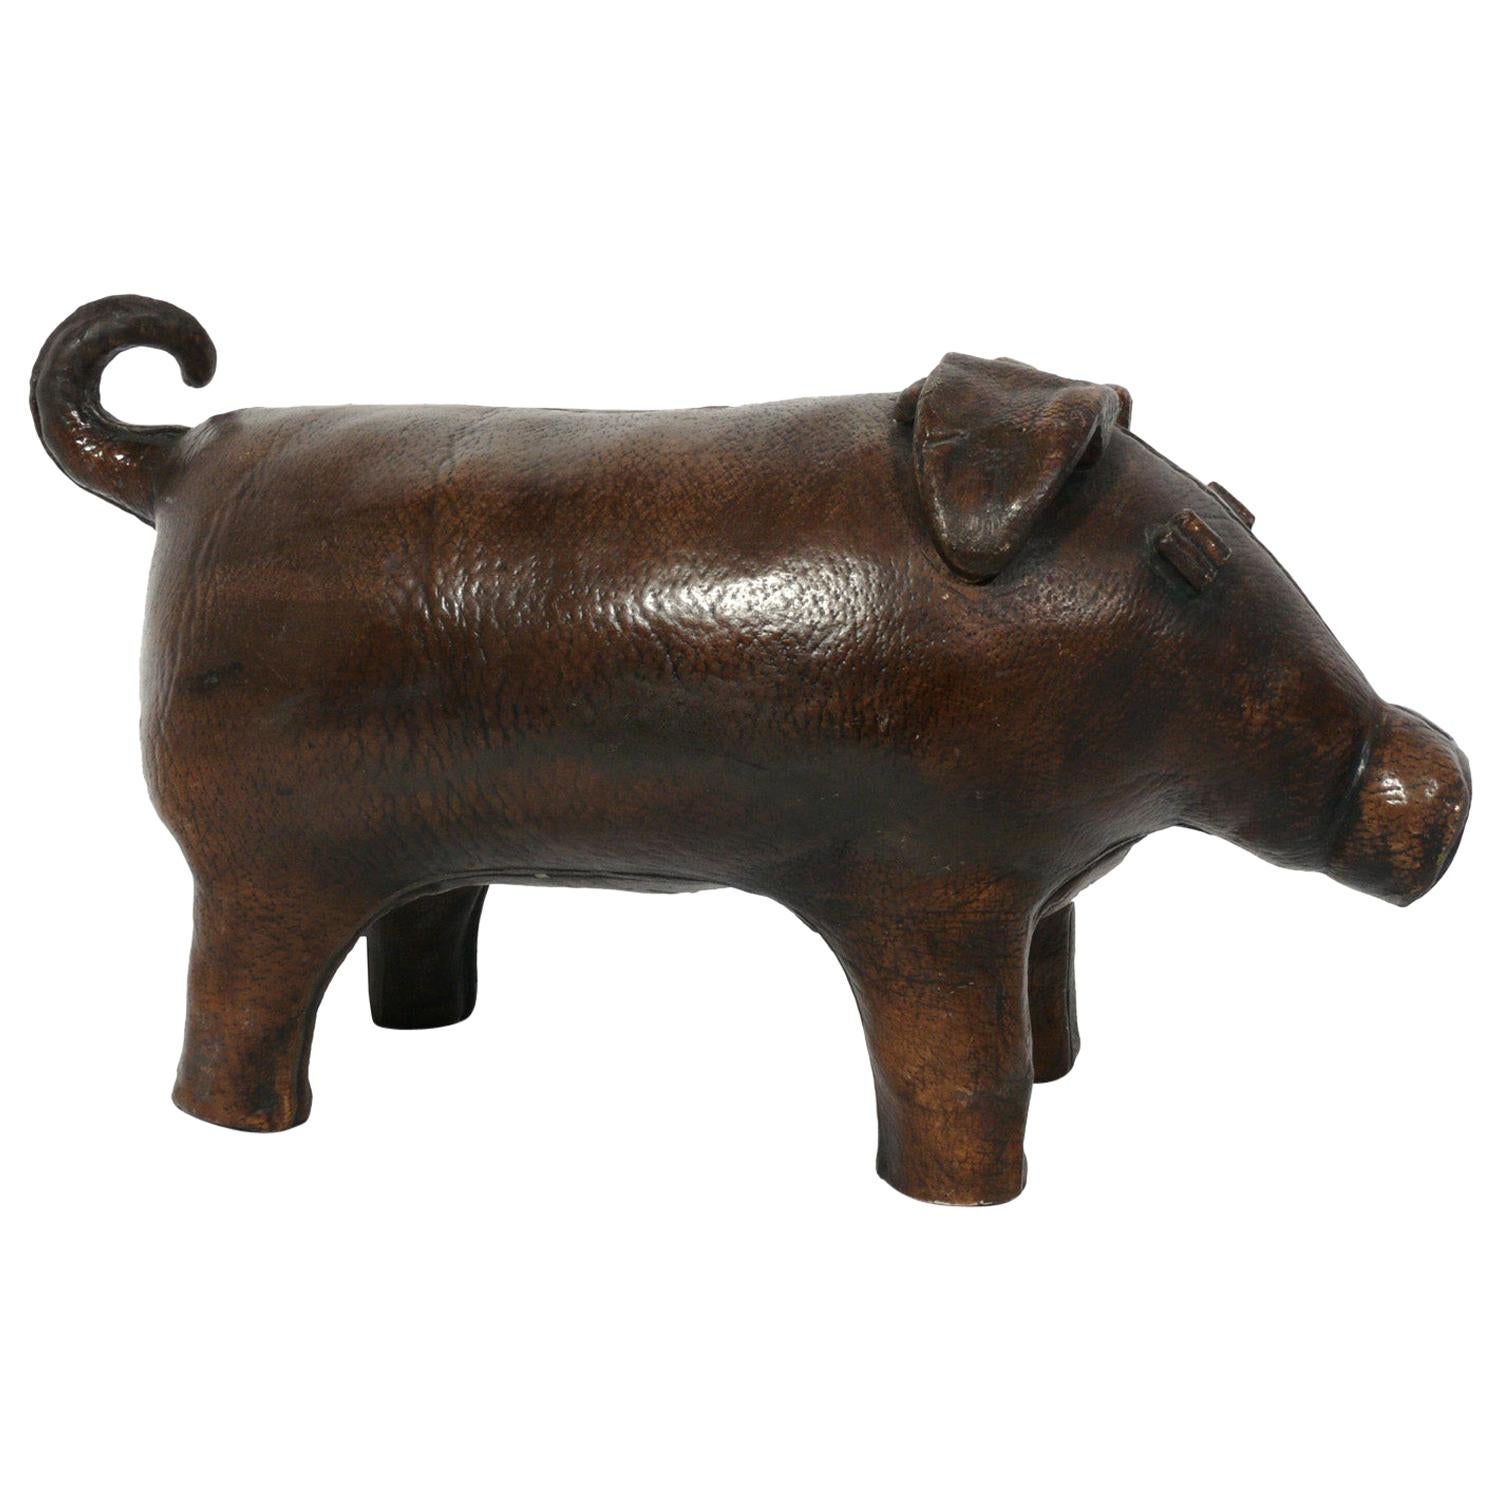 Abercrombie & Fitch Ceramic Piggy Bank